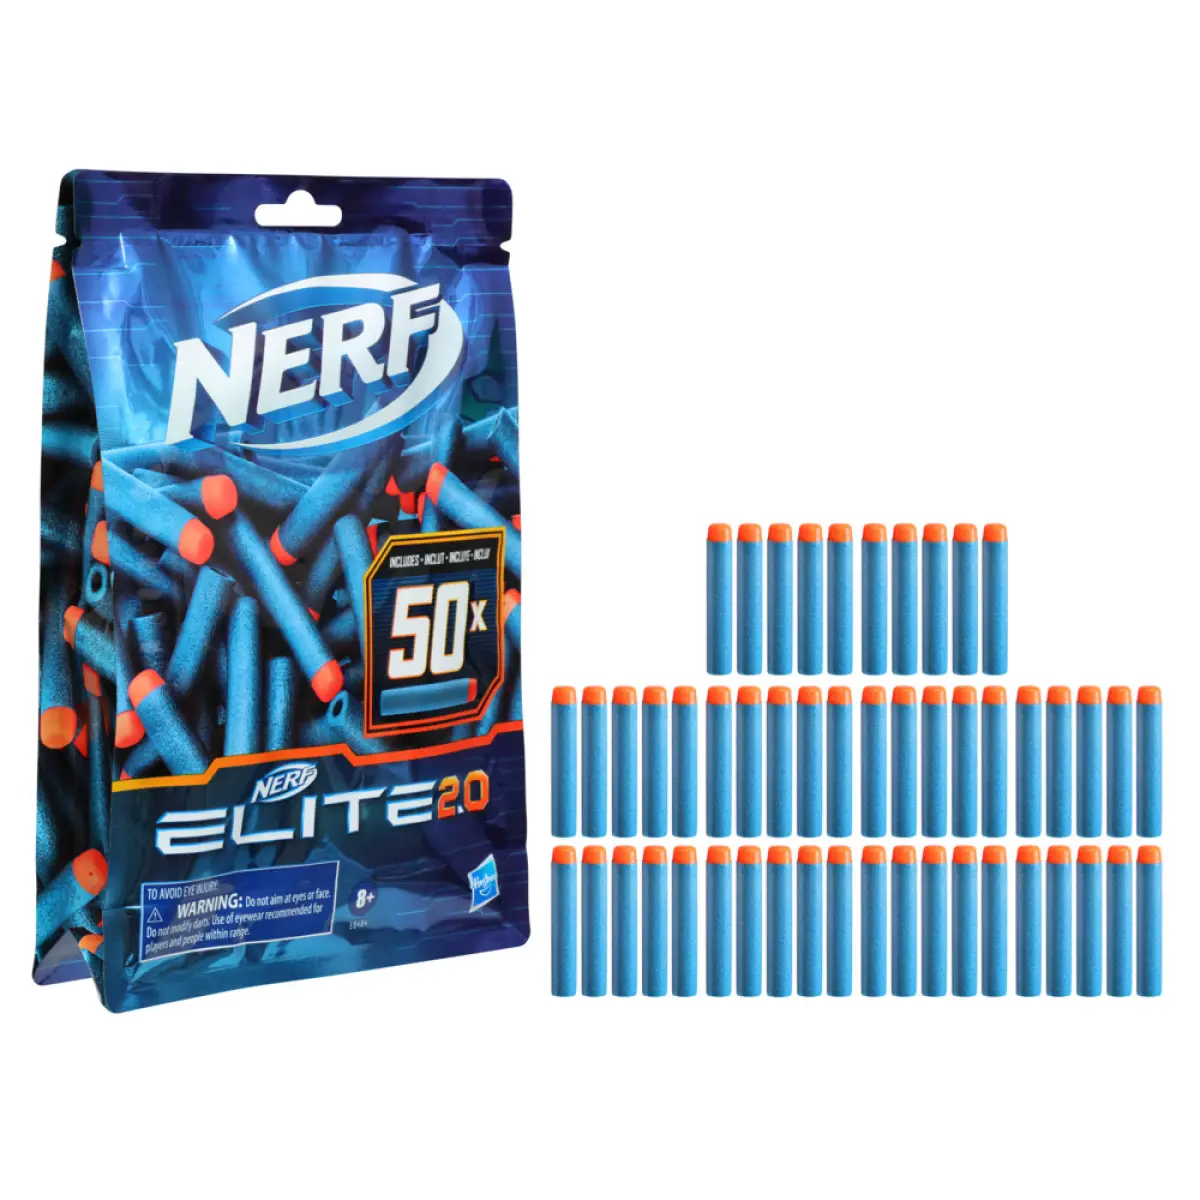 Recharge Nerf Mega 10 Flechettes;